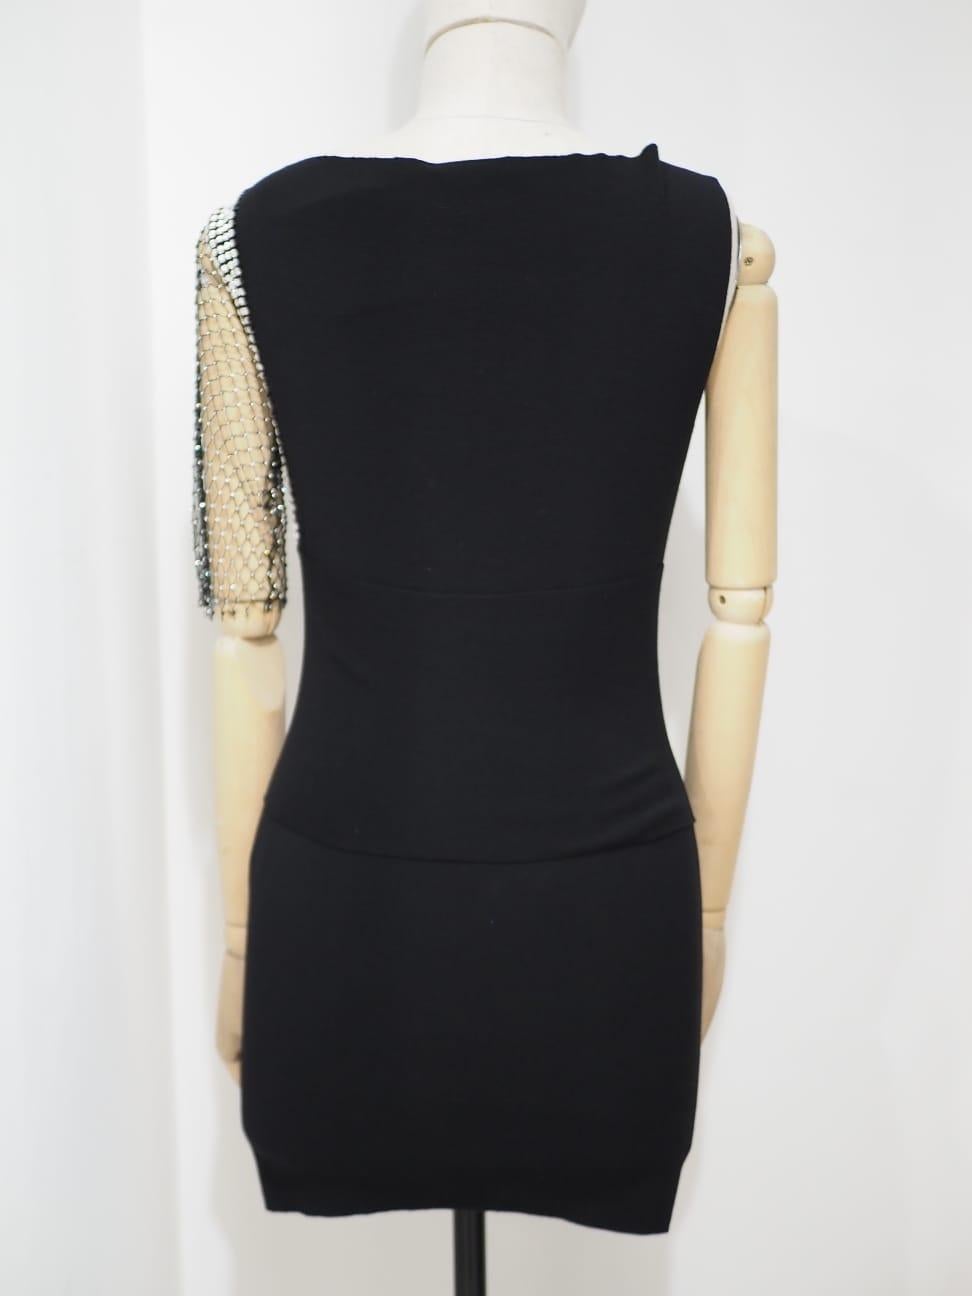 Balmain black dress crystal swarovski stones dress For Sale 1